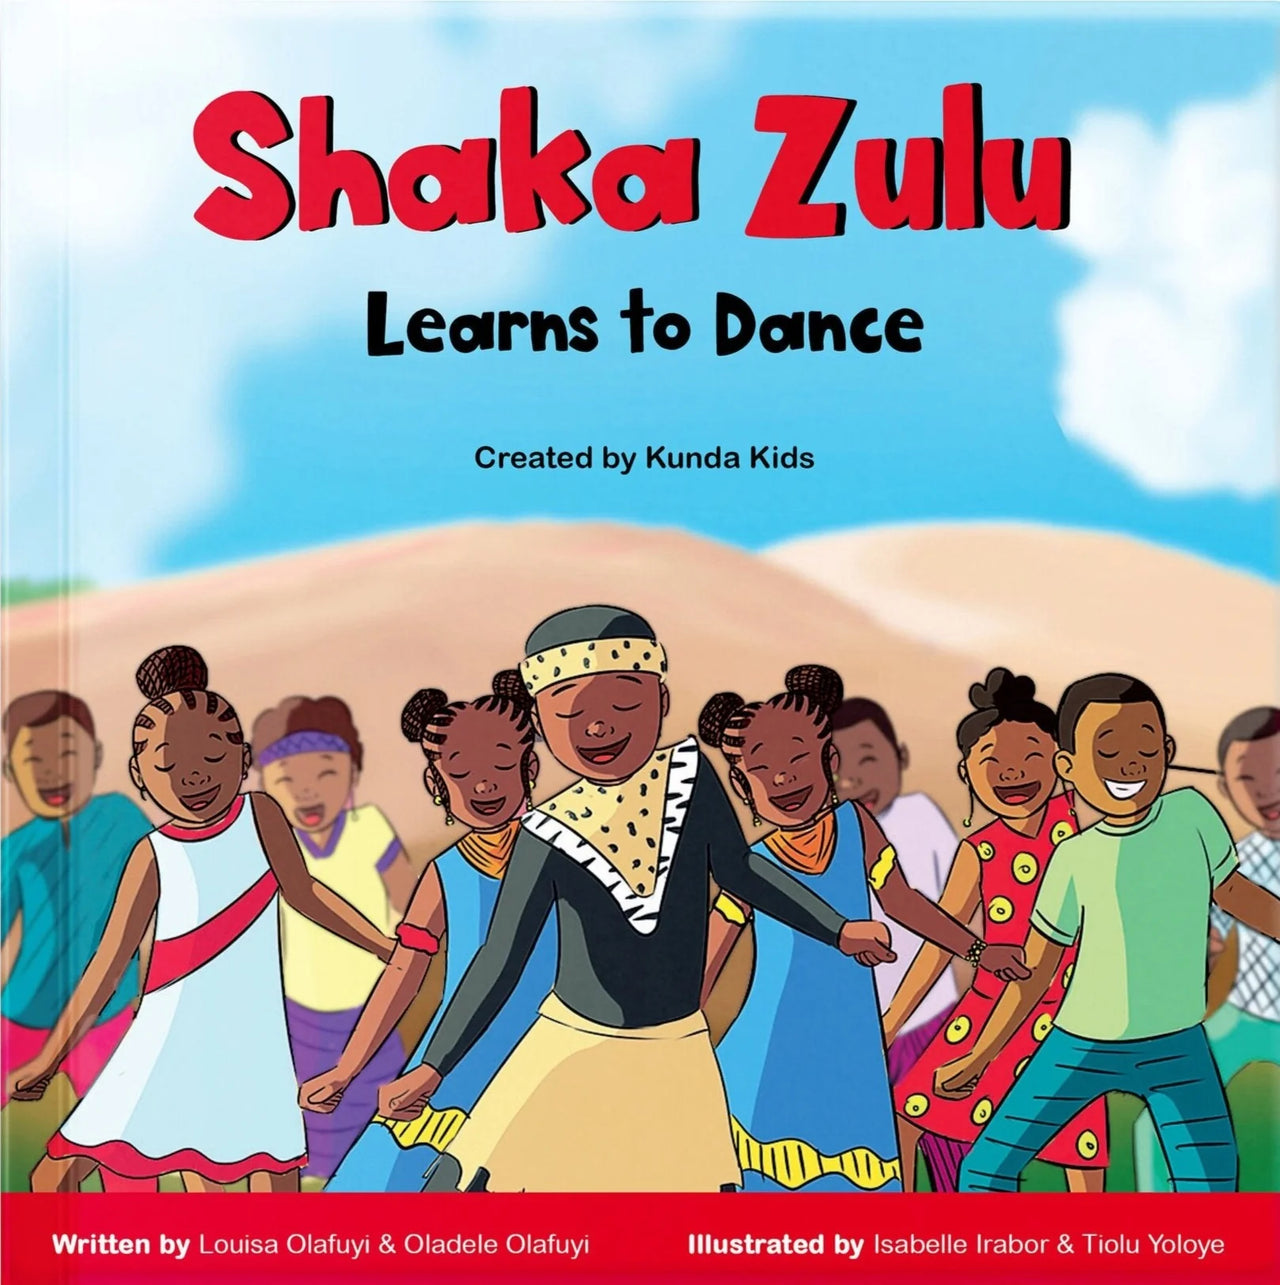 Shaka Zulu Learns To Dance by Louisa Olafuyi & Oladele Olafuyi